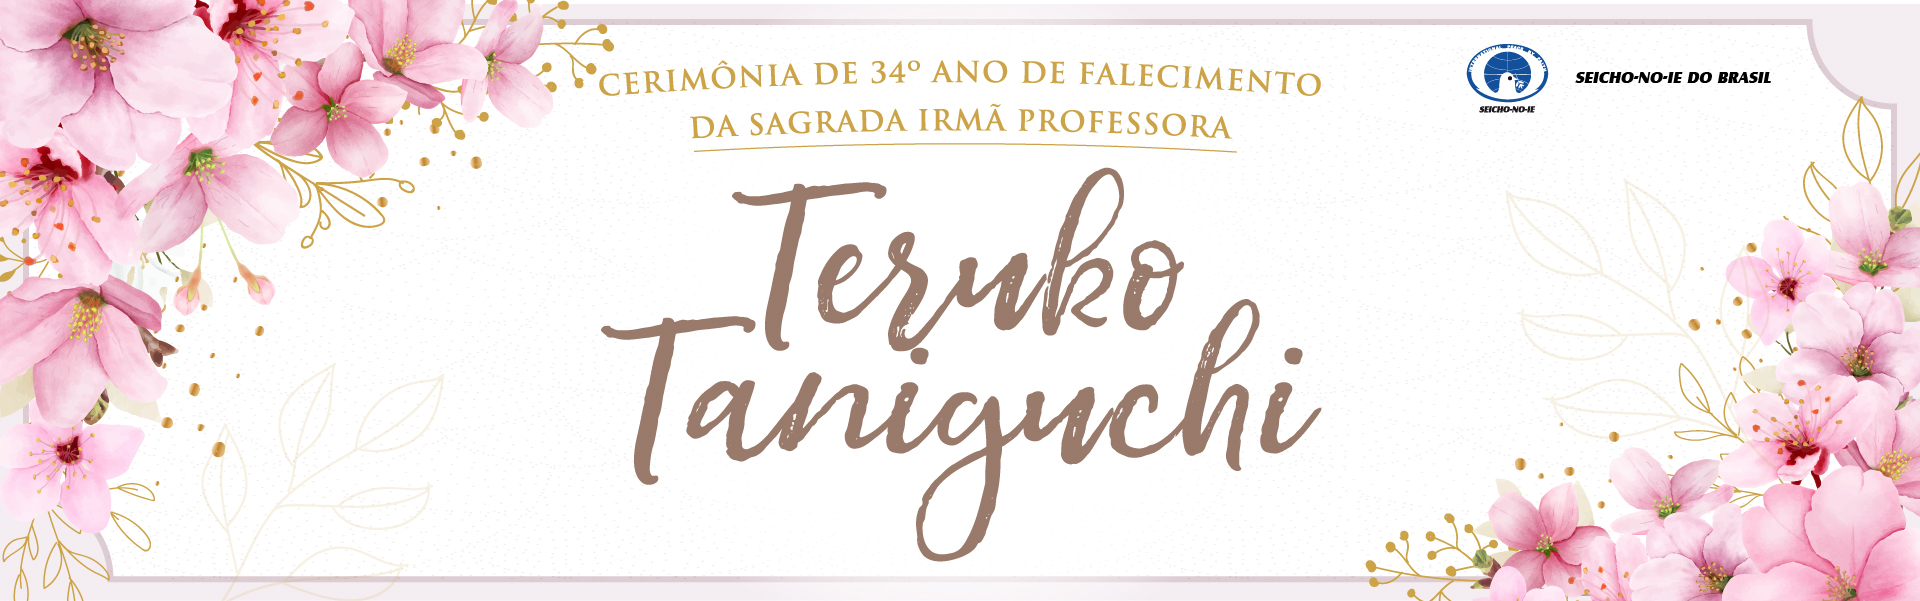 Topo pagina 1920x600 Cerimonia de 34o Falecimento da Sagrada Irma Professora Teruko Taniguchi Virtual Cerimônia de 34° Ano de Falecimento da Sagrada Irmã Professora Teruko Taniguchi - 24/04